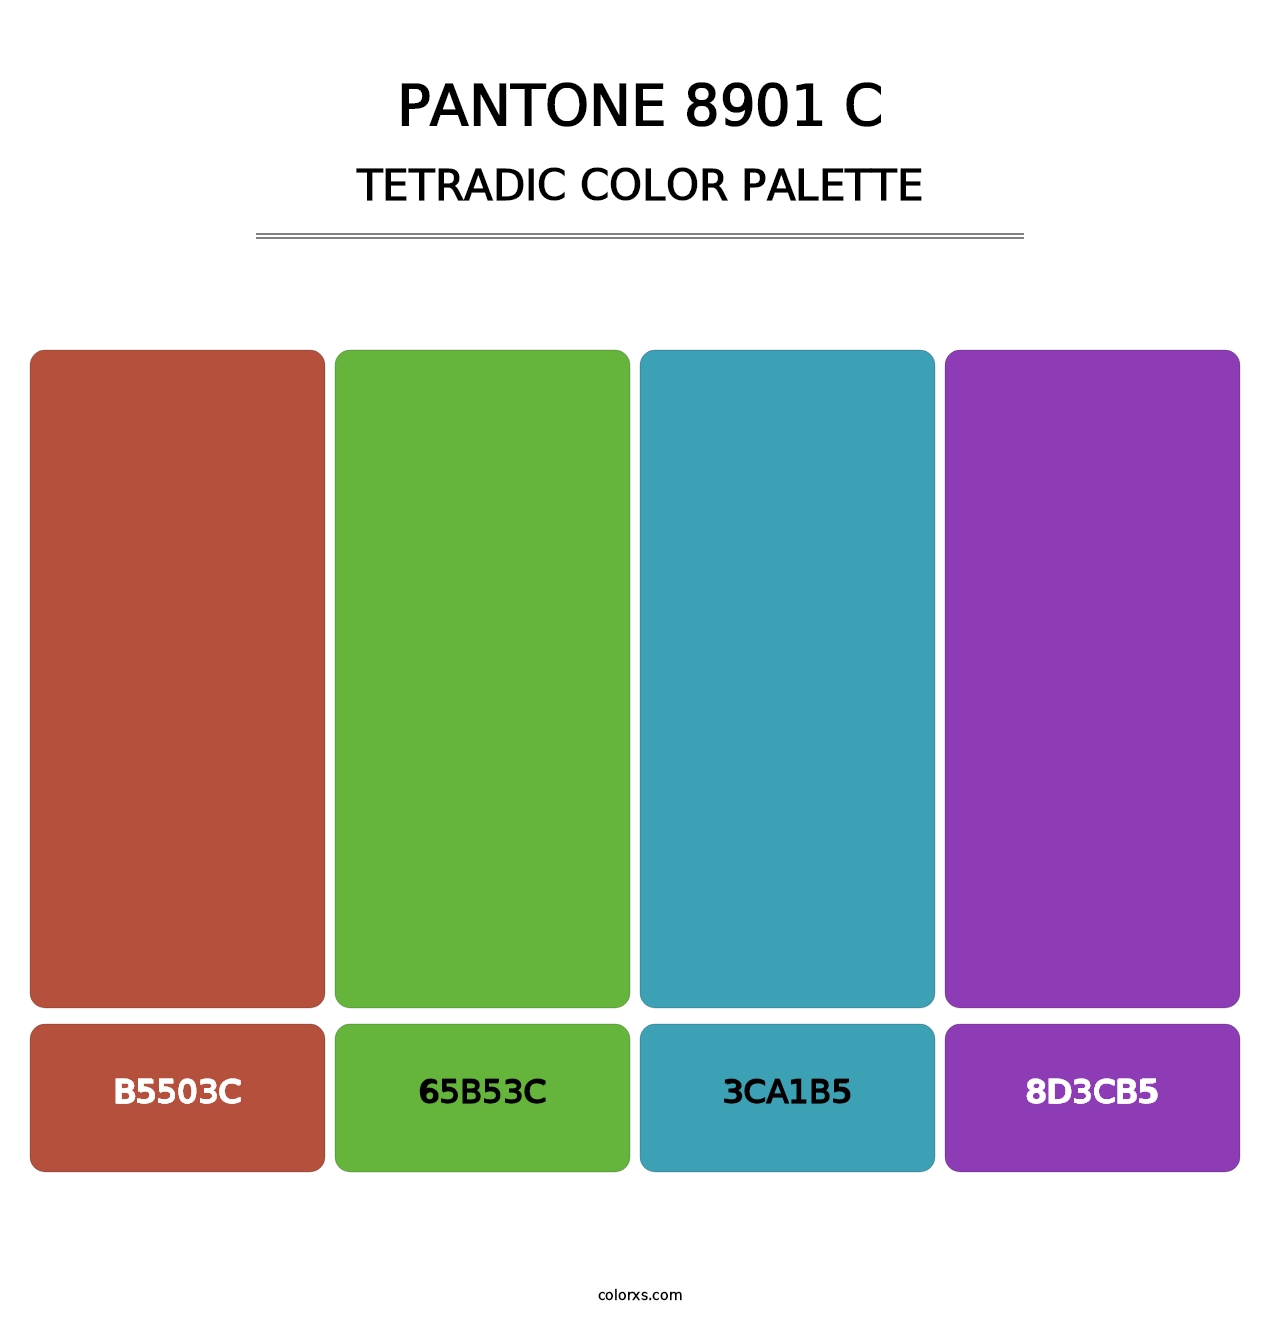 PANTONE 8901 C - Tetradic Color Palette